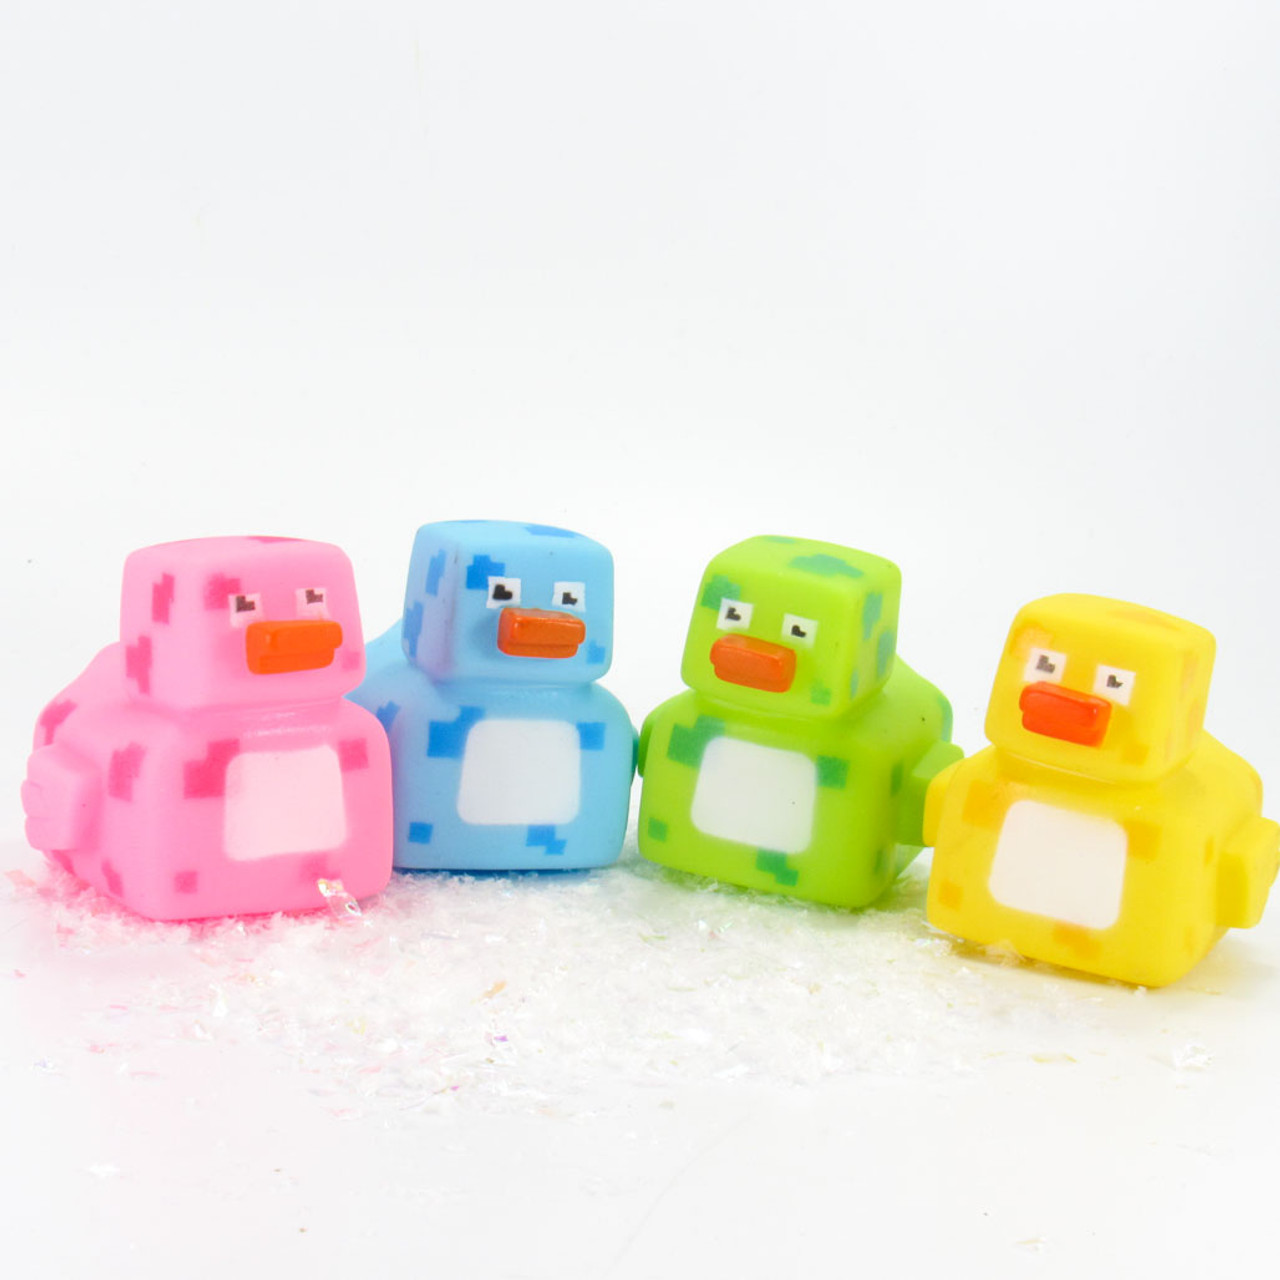 Mind Craft Digital Gift Bundle Small Rubber Ducks